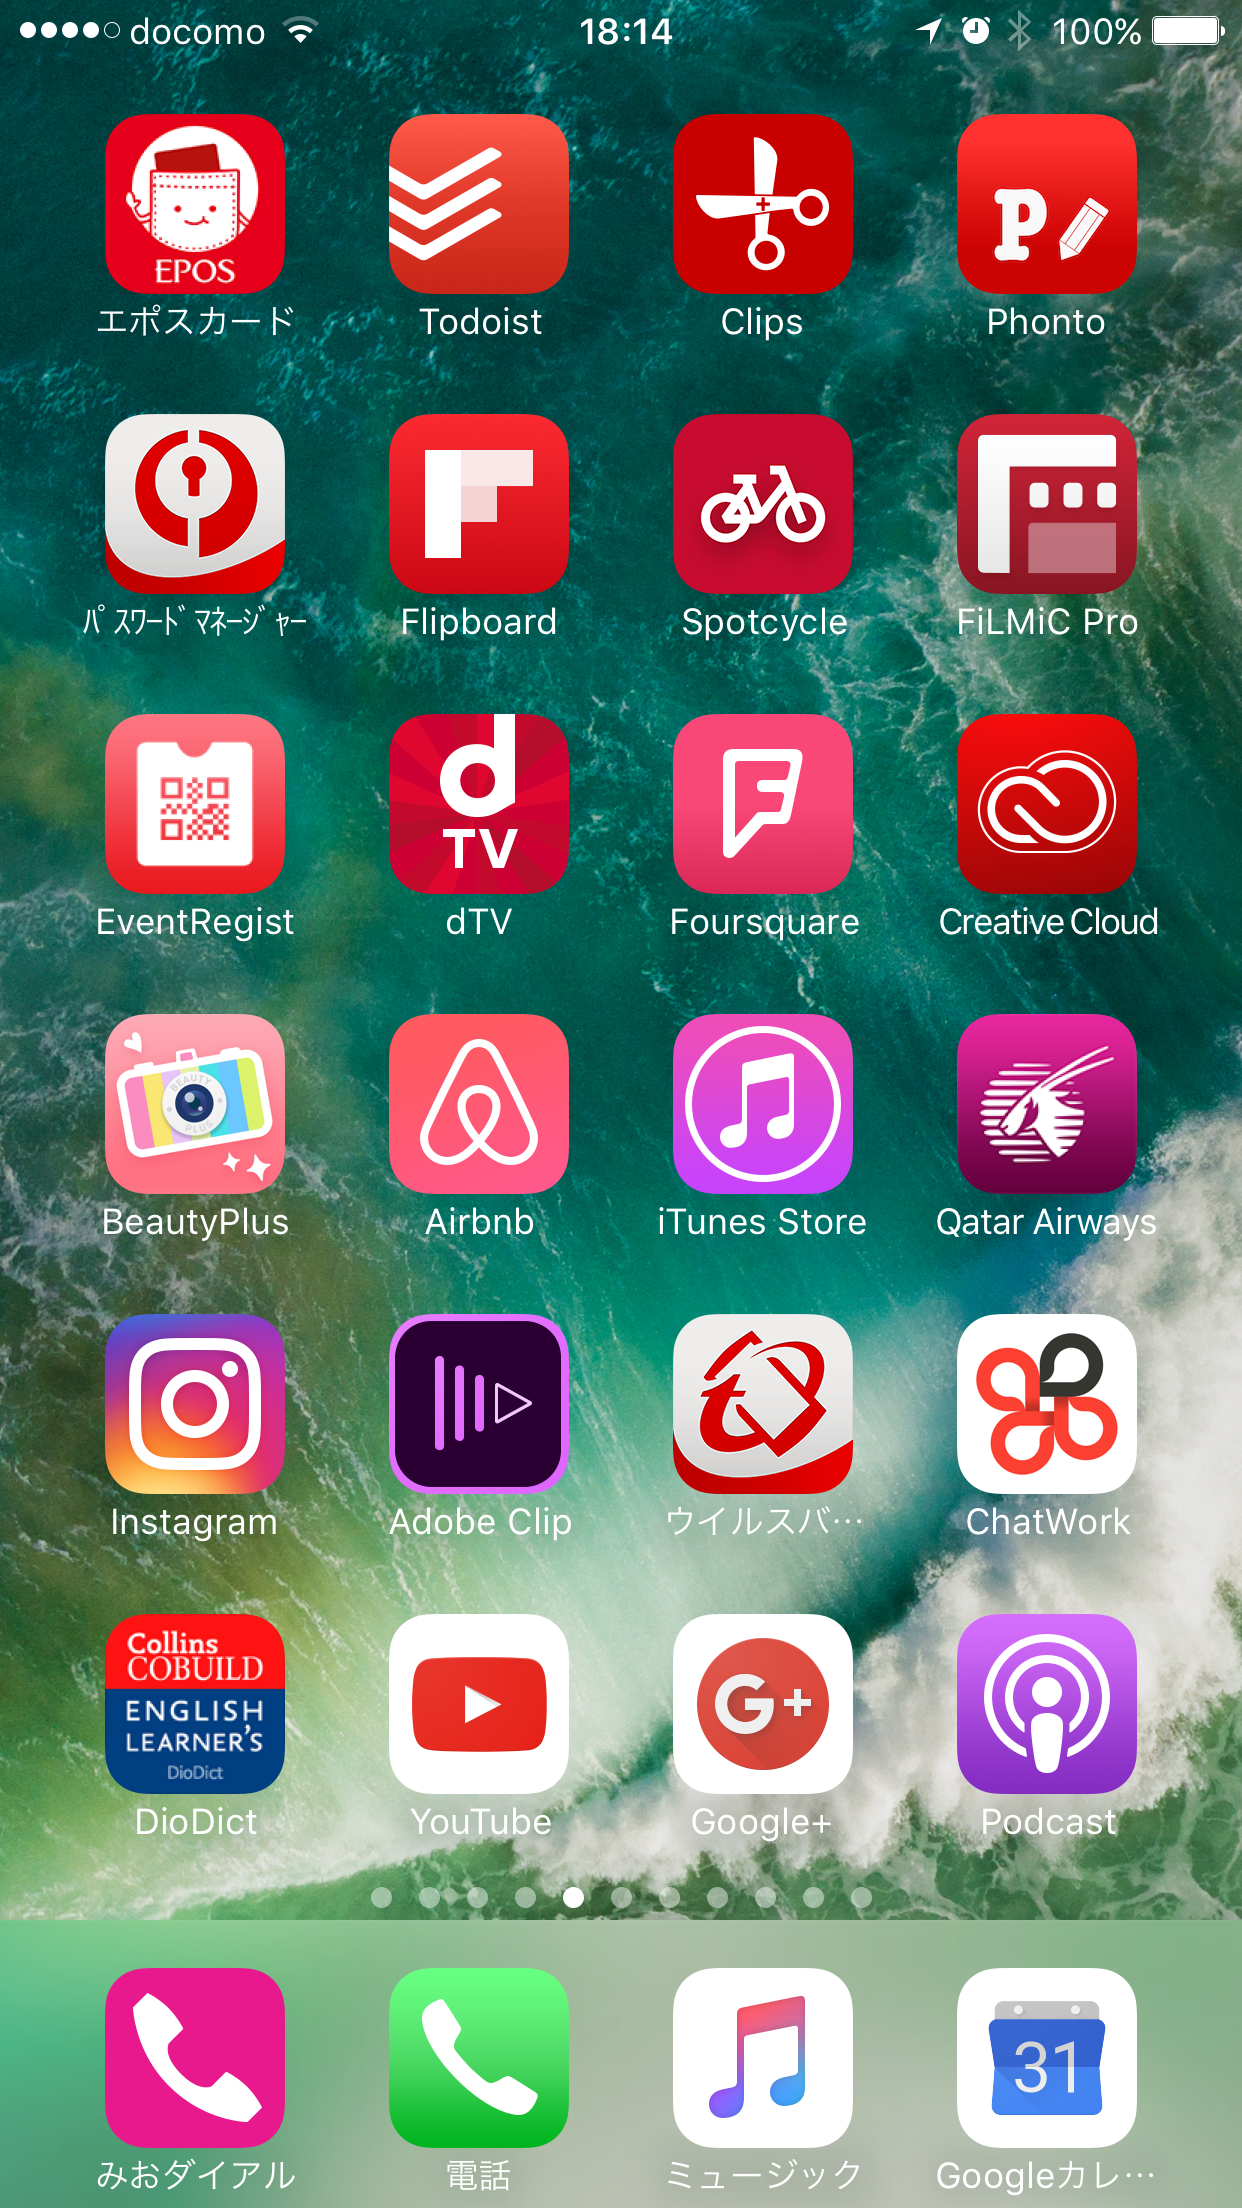 Iphoneアプリの整理の仕方は色別で そのままが美しい